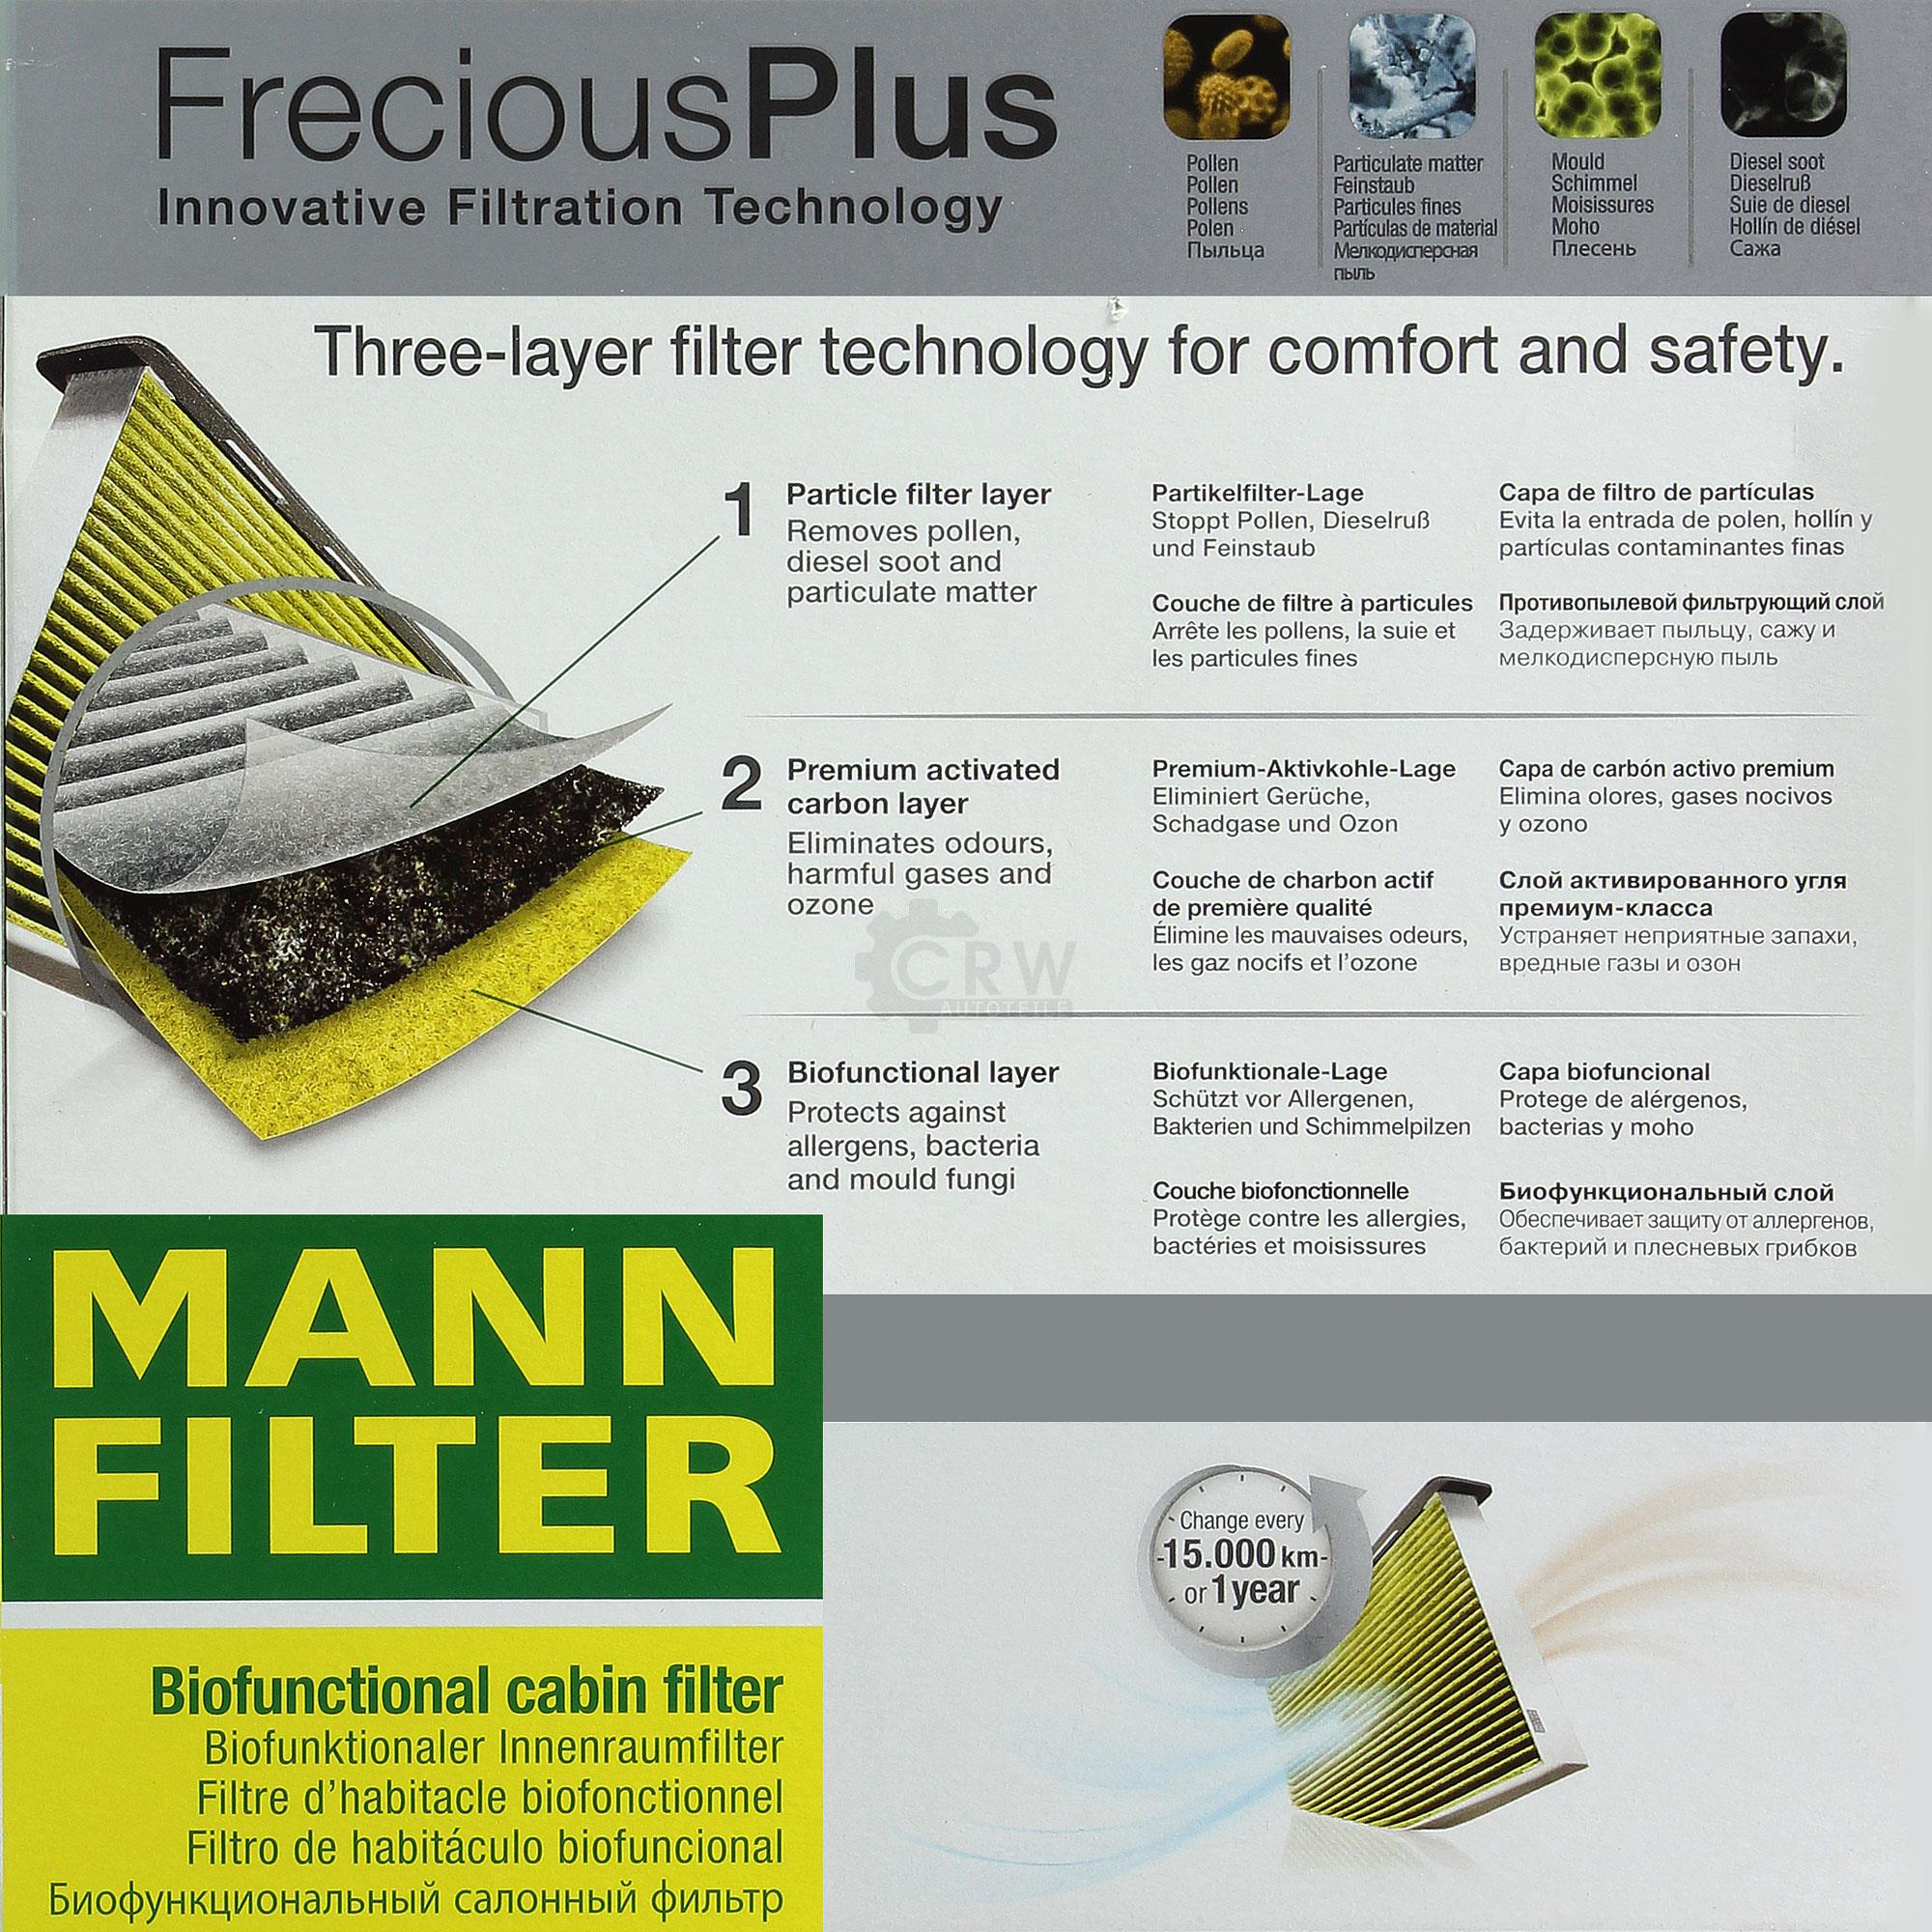 MANN-Filter Innenraumfilter Biofunctional für Allergiker FP 2559